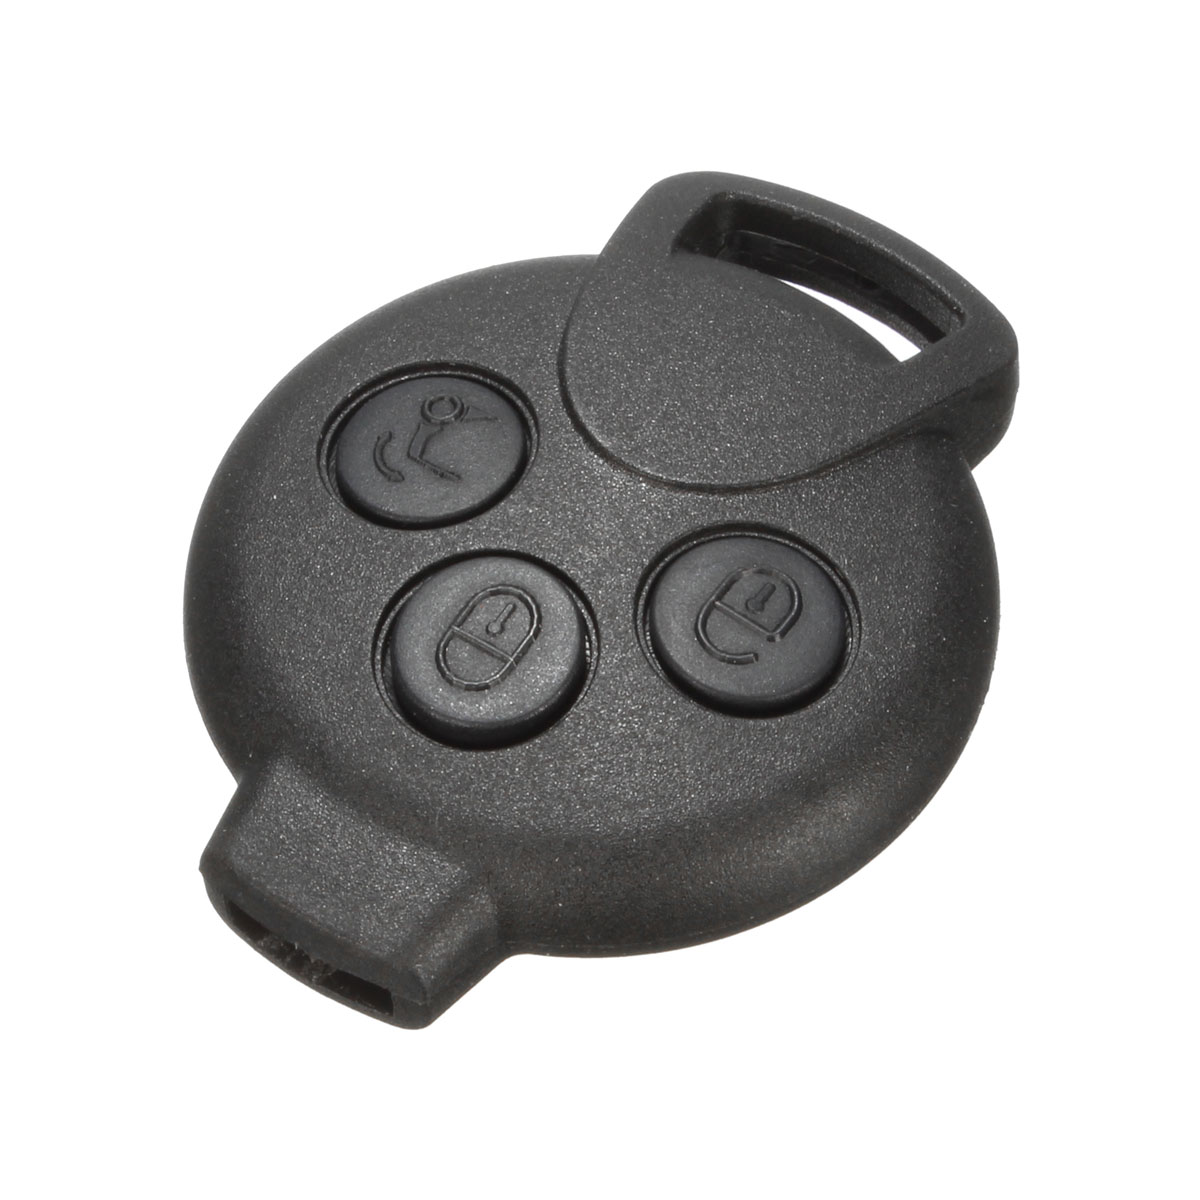 

3 Button Car Remote Control Key FOB Shell Case For 451 Fortwo Cabrio Roadstar Coupe